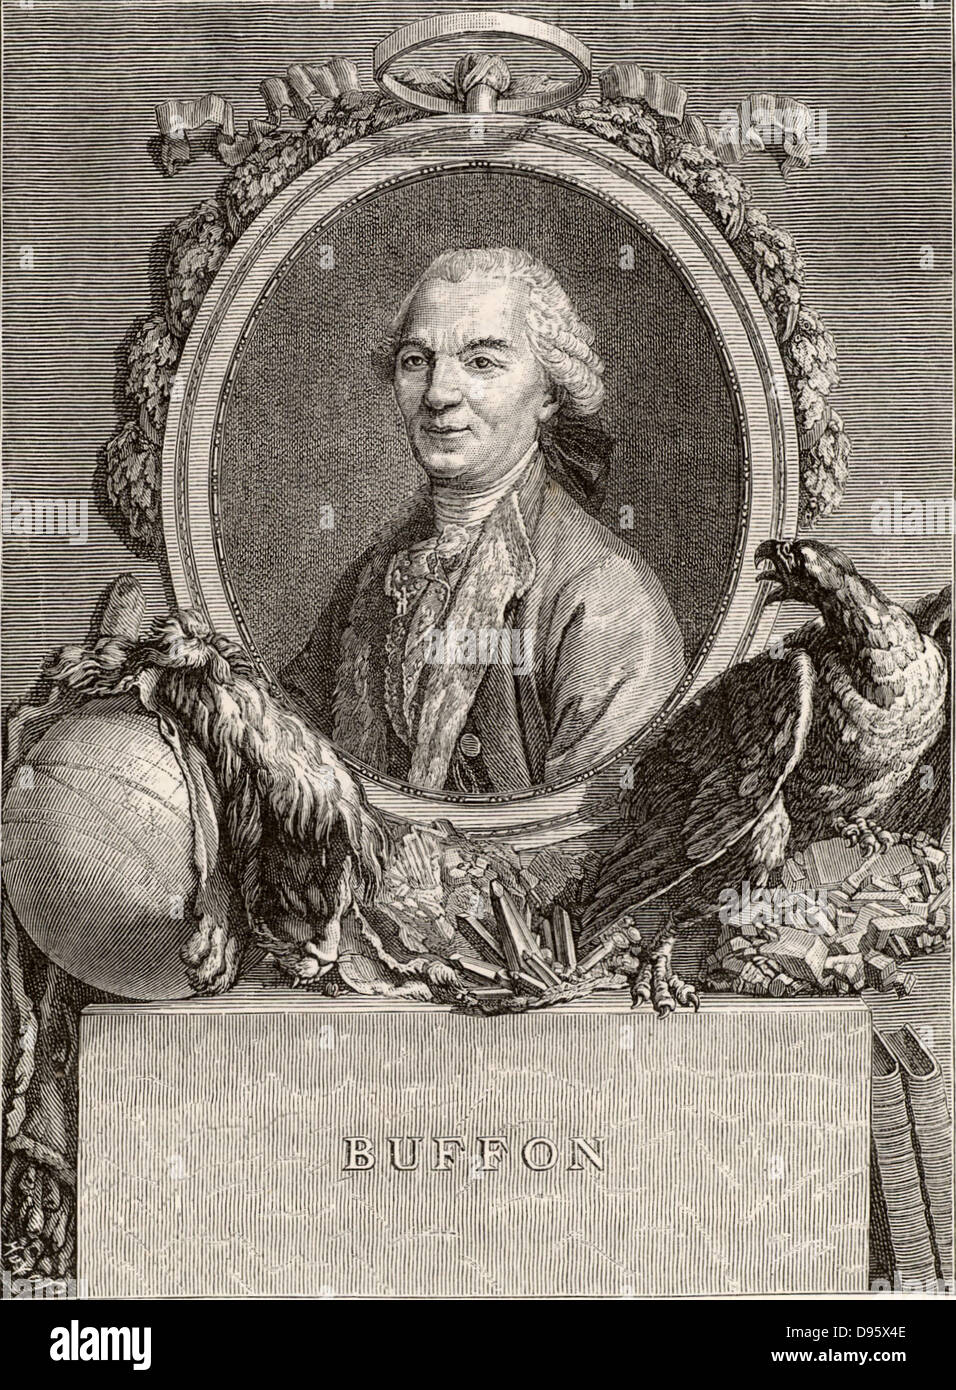 Georges-Louis Leclerc, Comte de Buffon (1707-88), französischer Naturforscher; Autor der 44 Band'Histoire Naturelle" 1749-67. Achtzehnten Jahrhundert Gravur. Stockfoto